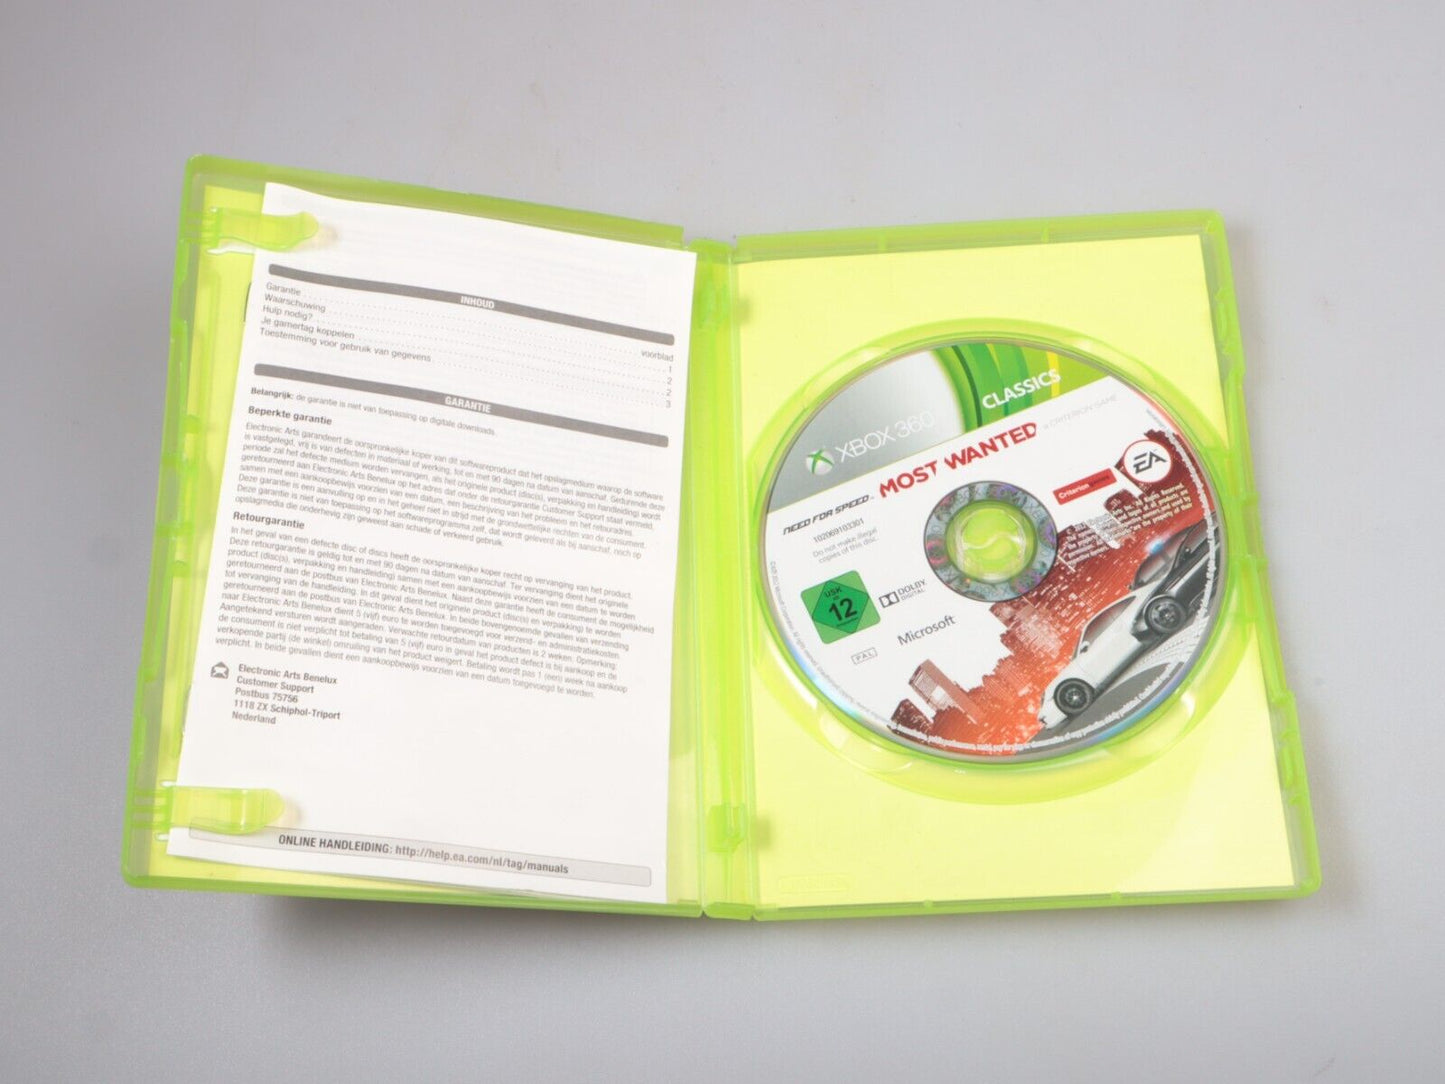 Xbox360 | Behoefte aan snelheid die het meest gewenst is 